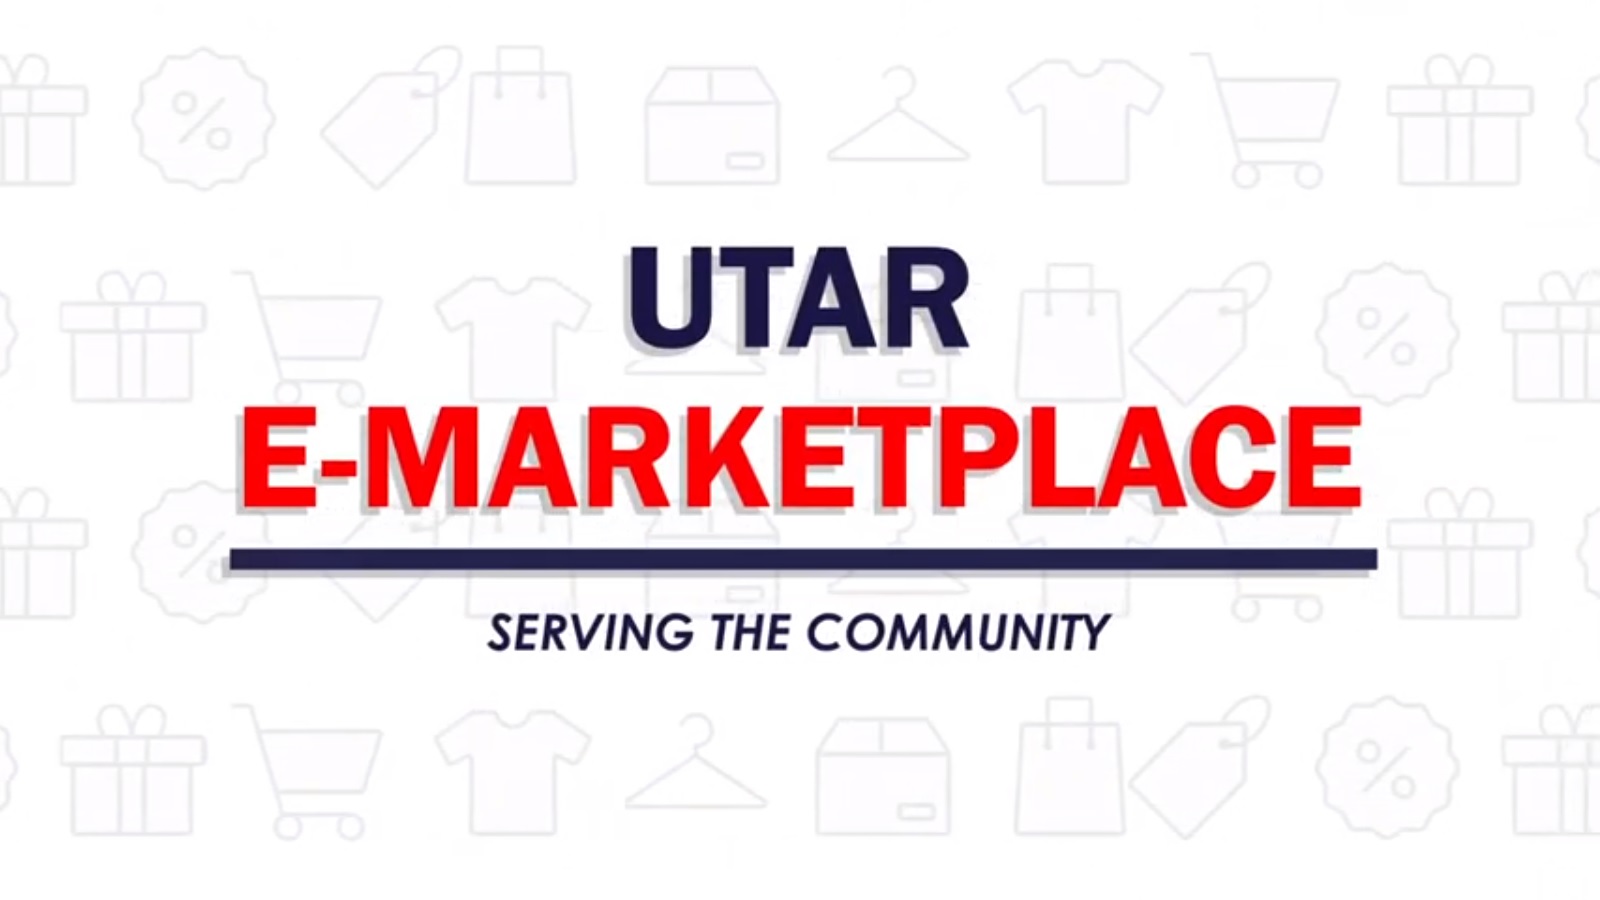 UTAR E-Marketplace